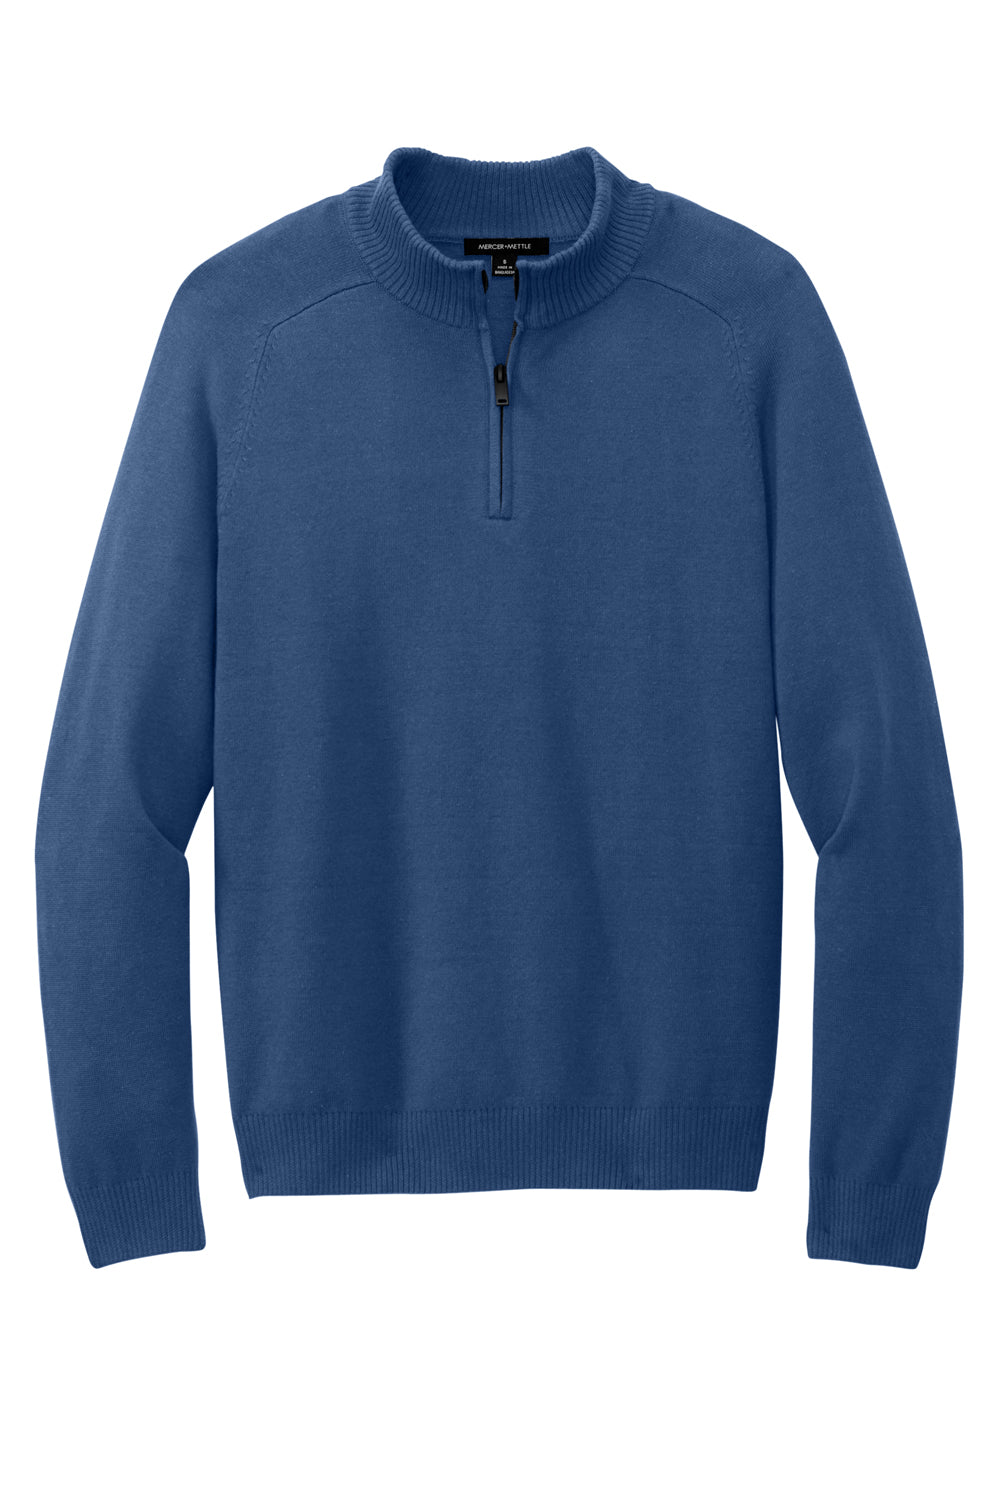 Mercer+Mettle MM3020 Mens 1/4 Zip Sweater Insignia Blue Flat Front